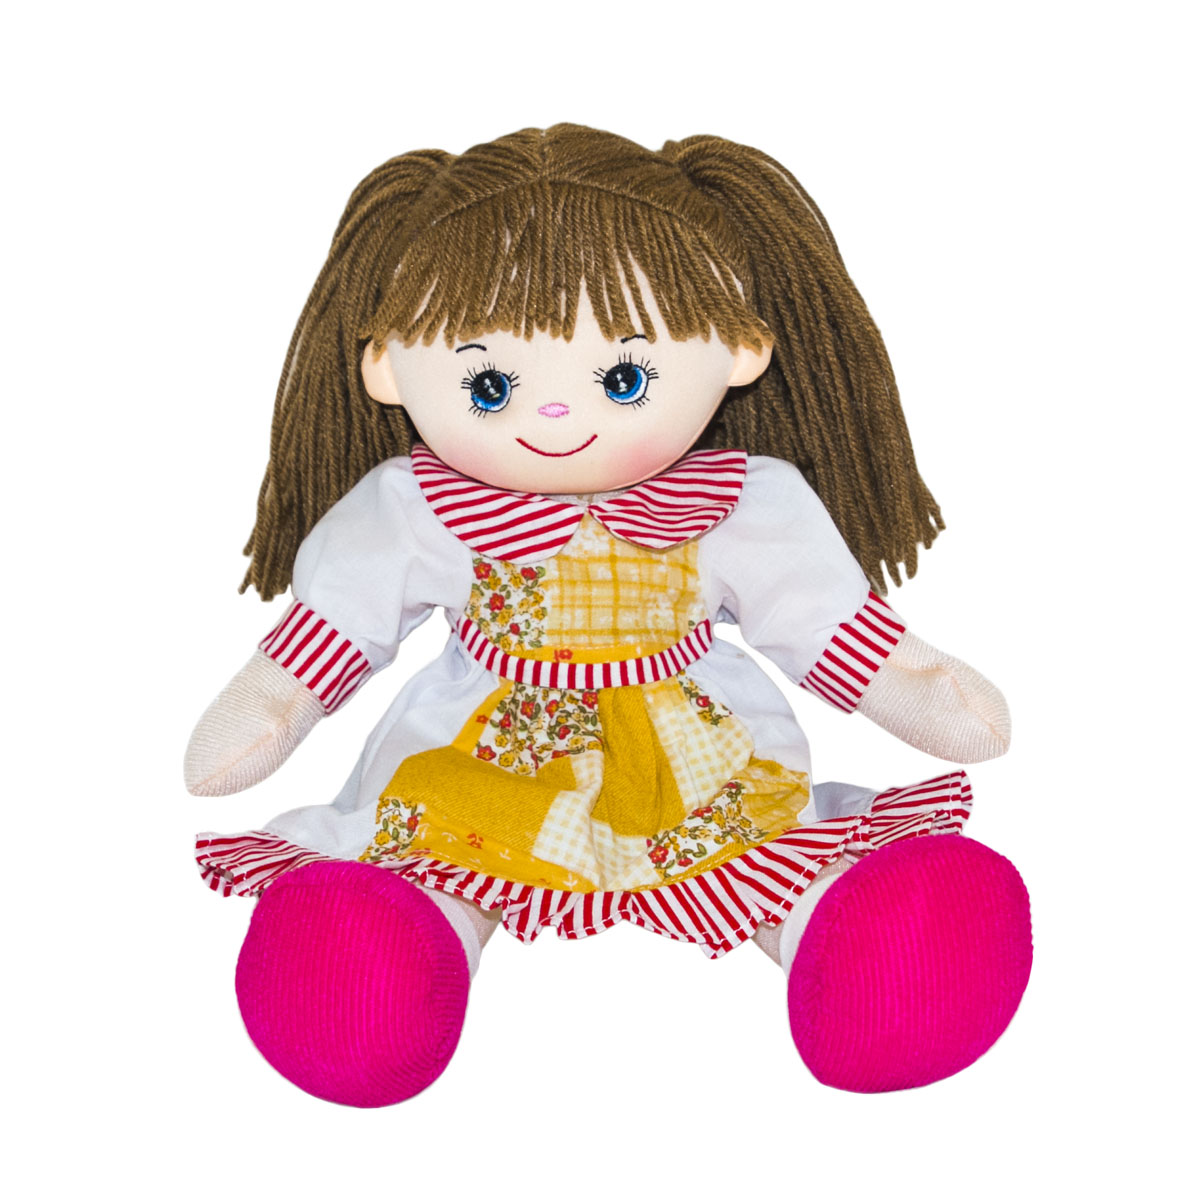 Кукла игрушка виды. Gulliver кукла Смородинка,30см. Кукла Смородинка 30 см. Кукла Гулливер мягконабивная. Кукла Gulliver Хозяюшка 30 см.